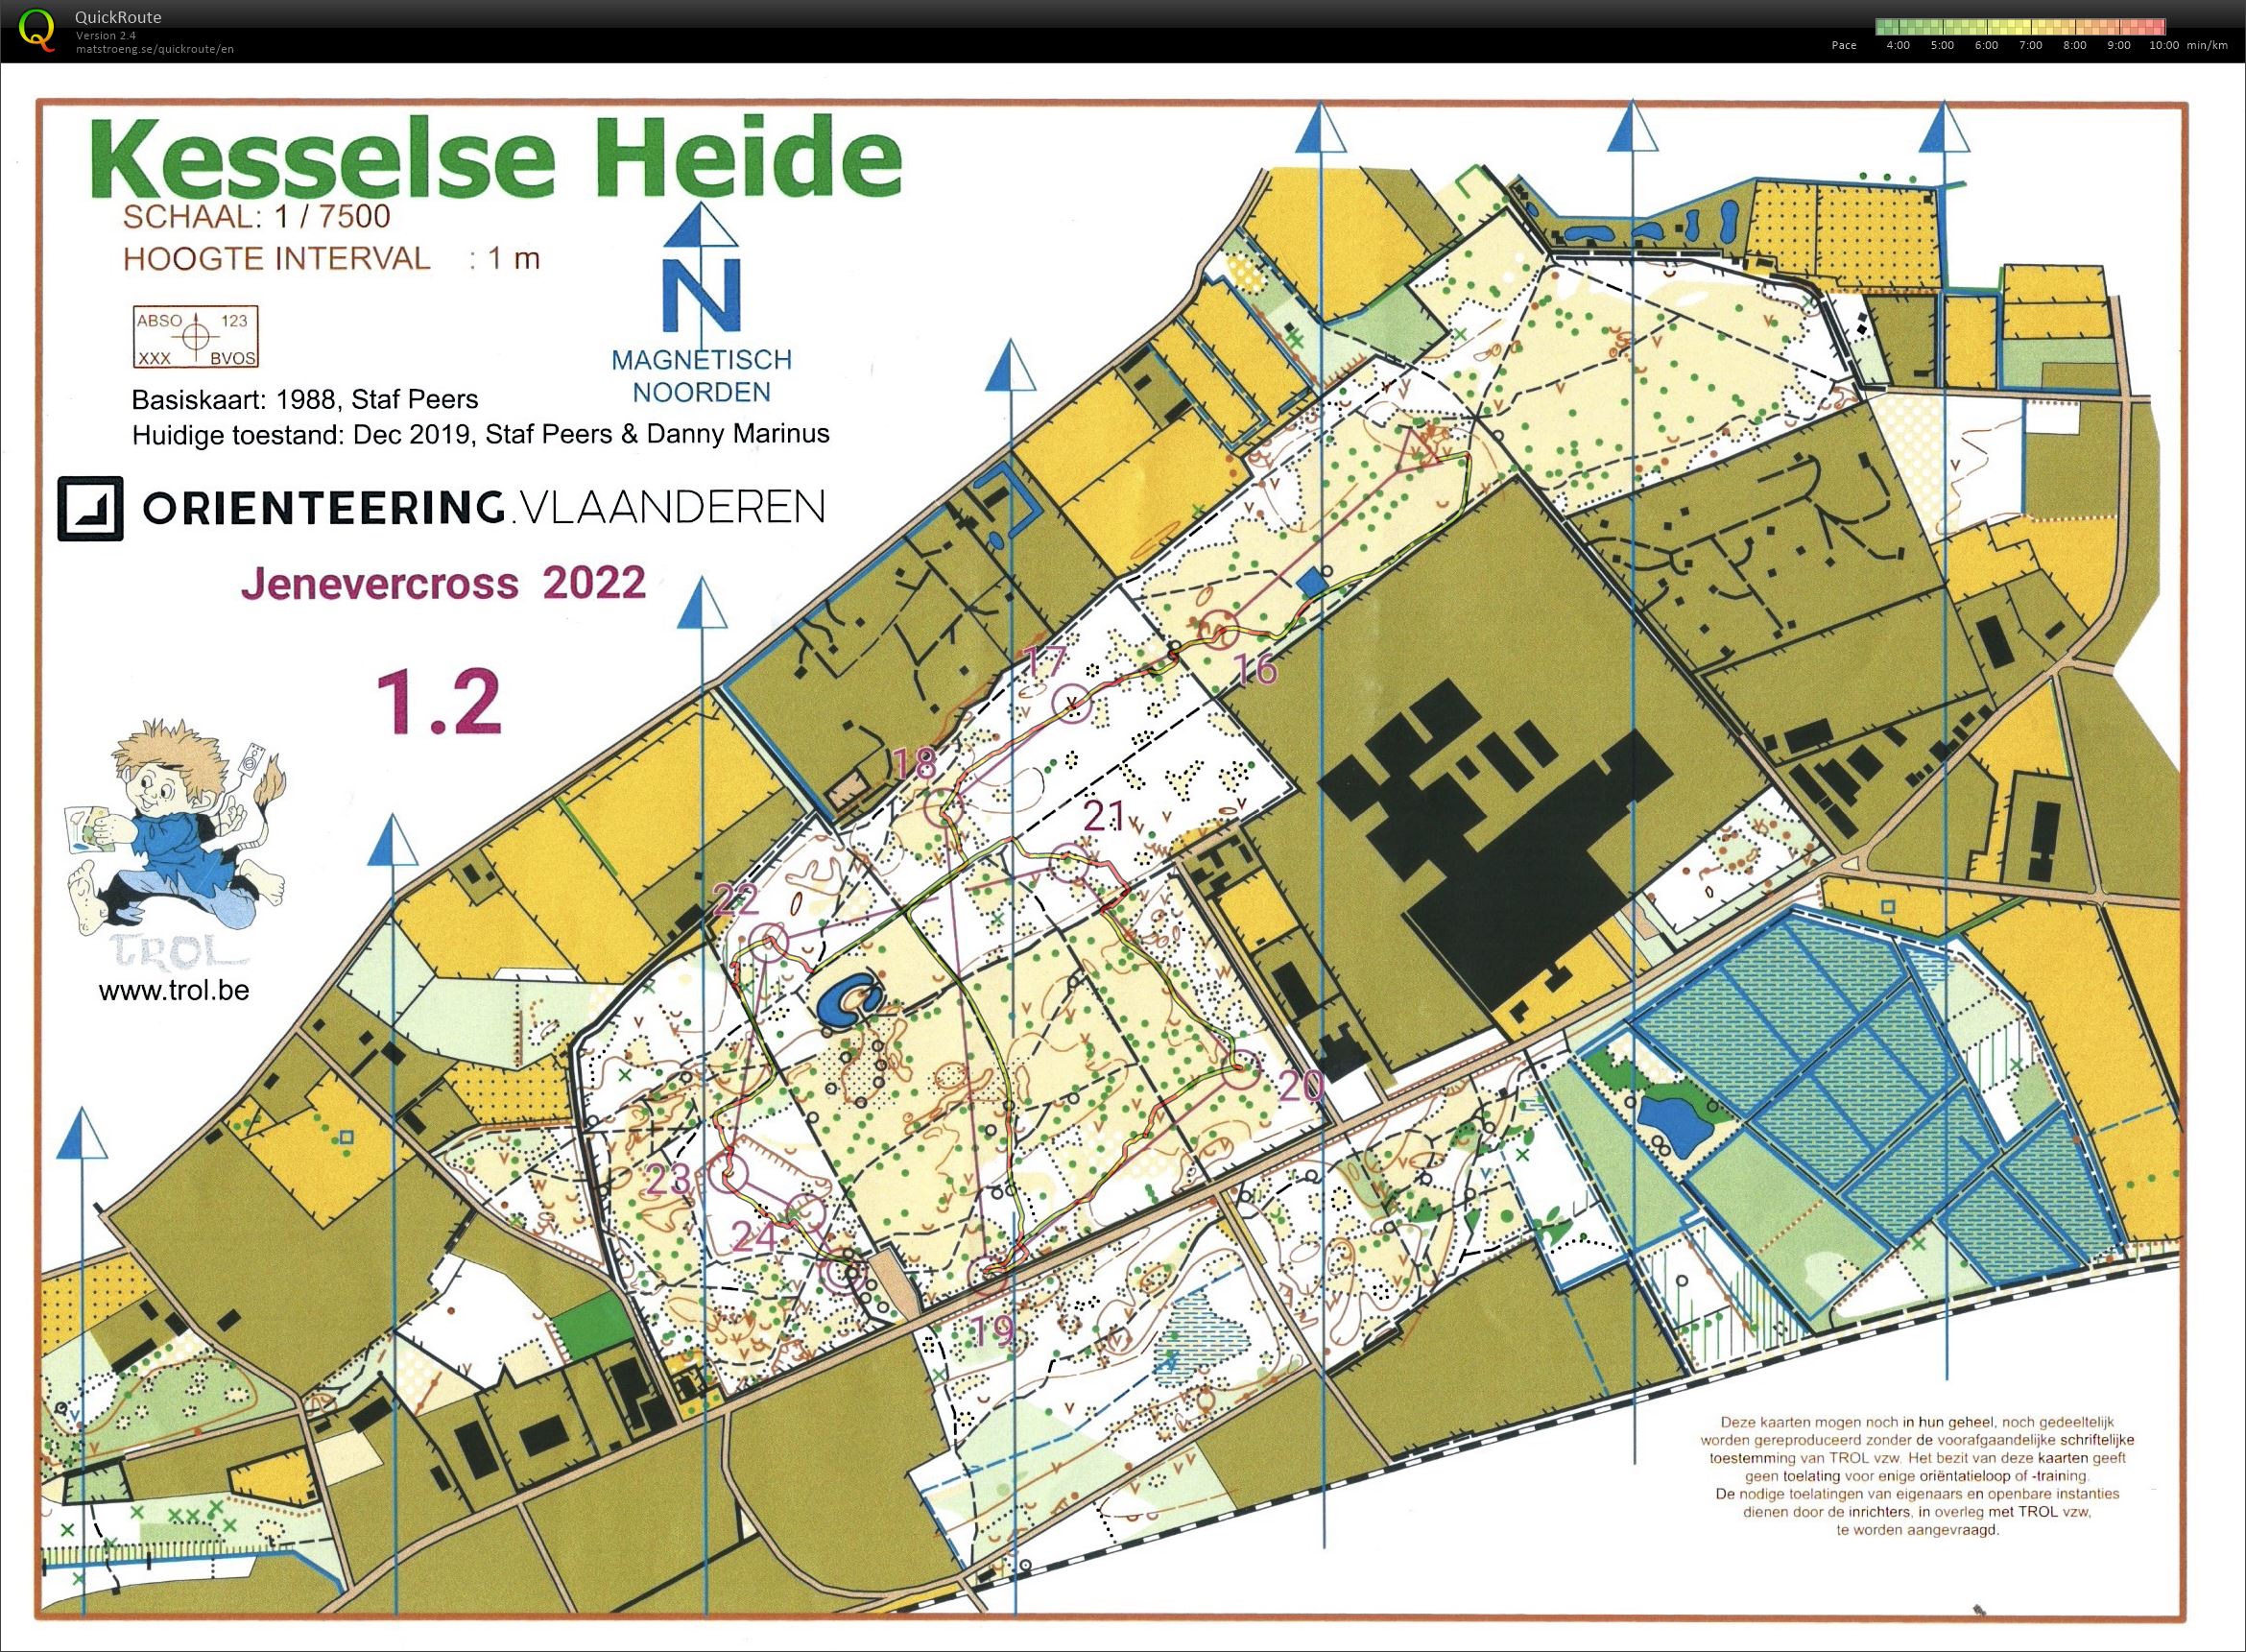 Jenevercross 2022 - Kesselse Heide - 1.2 (07/01/2022)